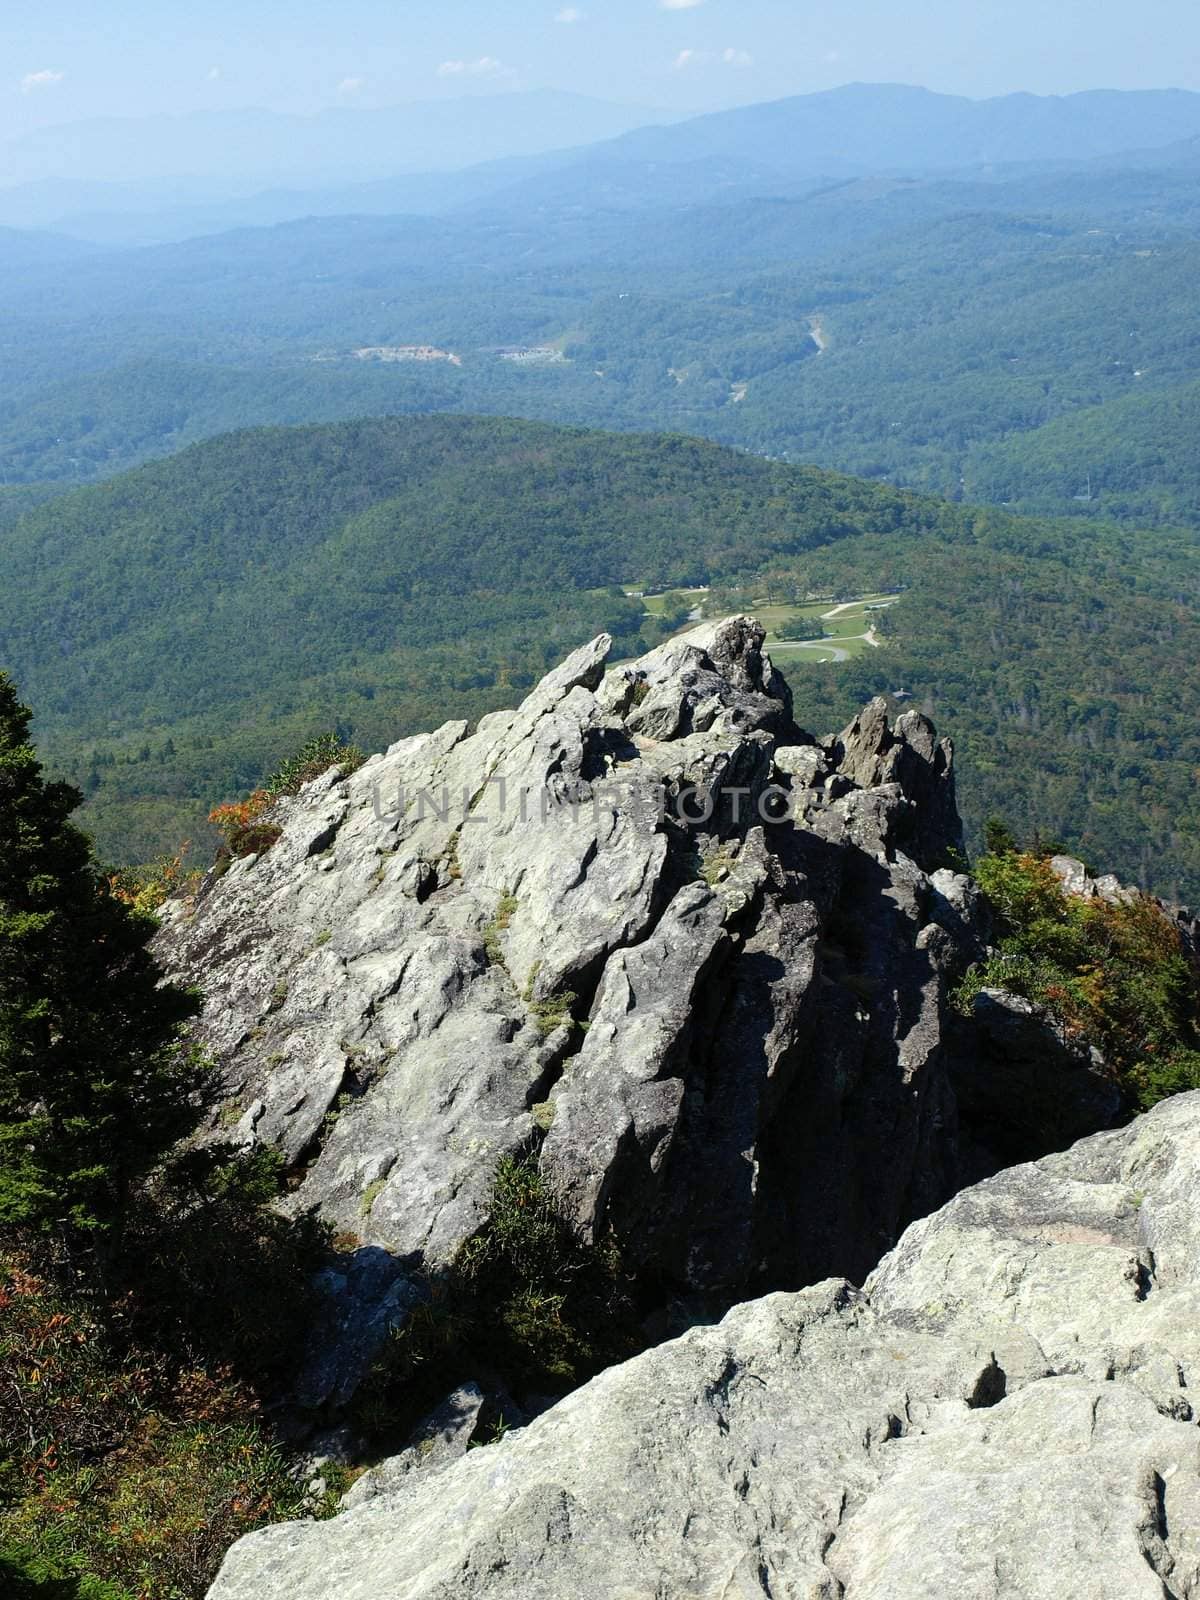 North Carolina peak by northwoodsphoto